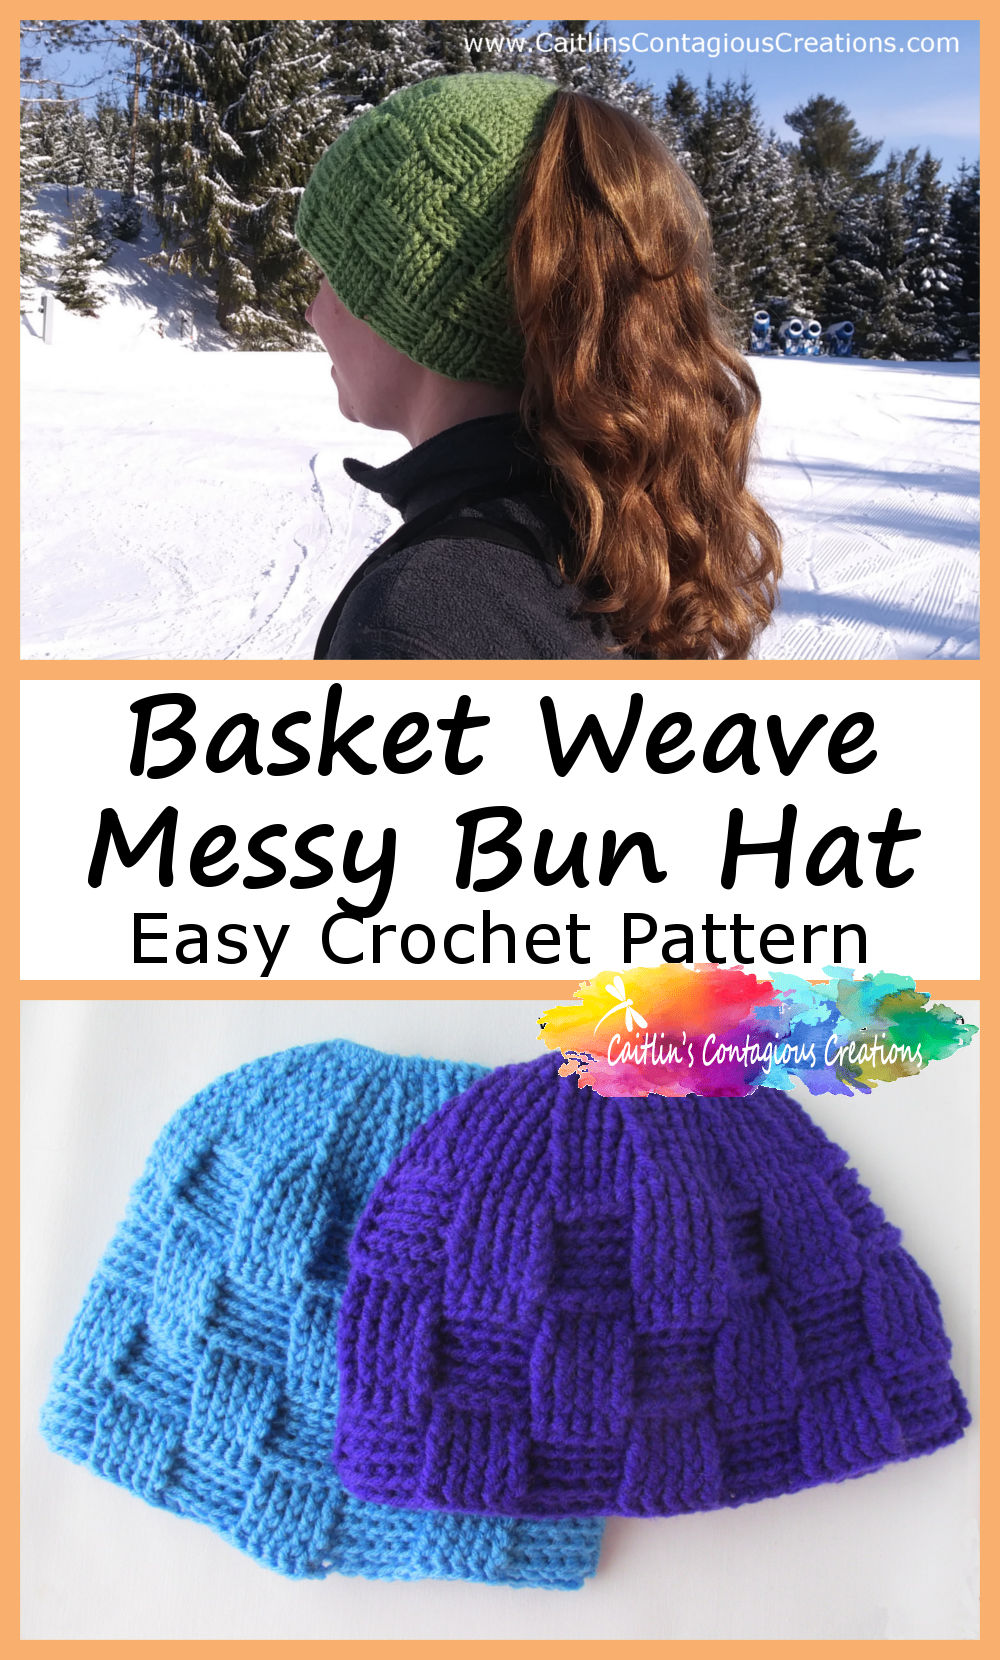 Text overlay of basket weave messy bun hat easy crochet pattern on orange background